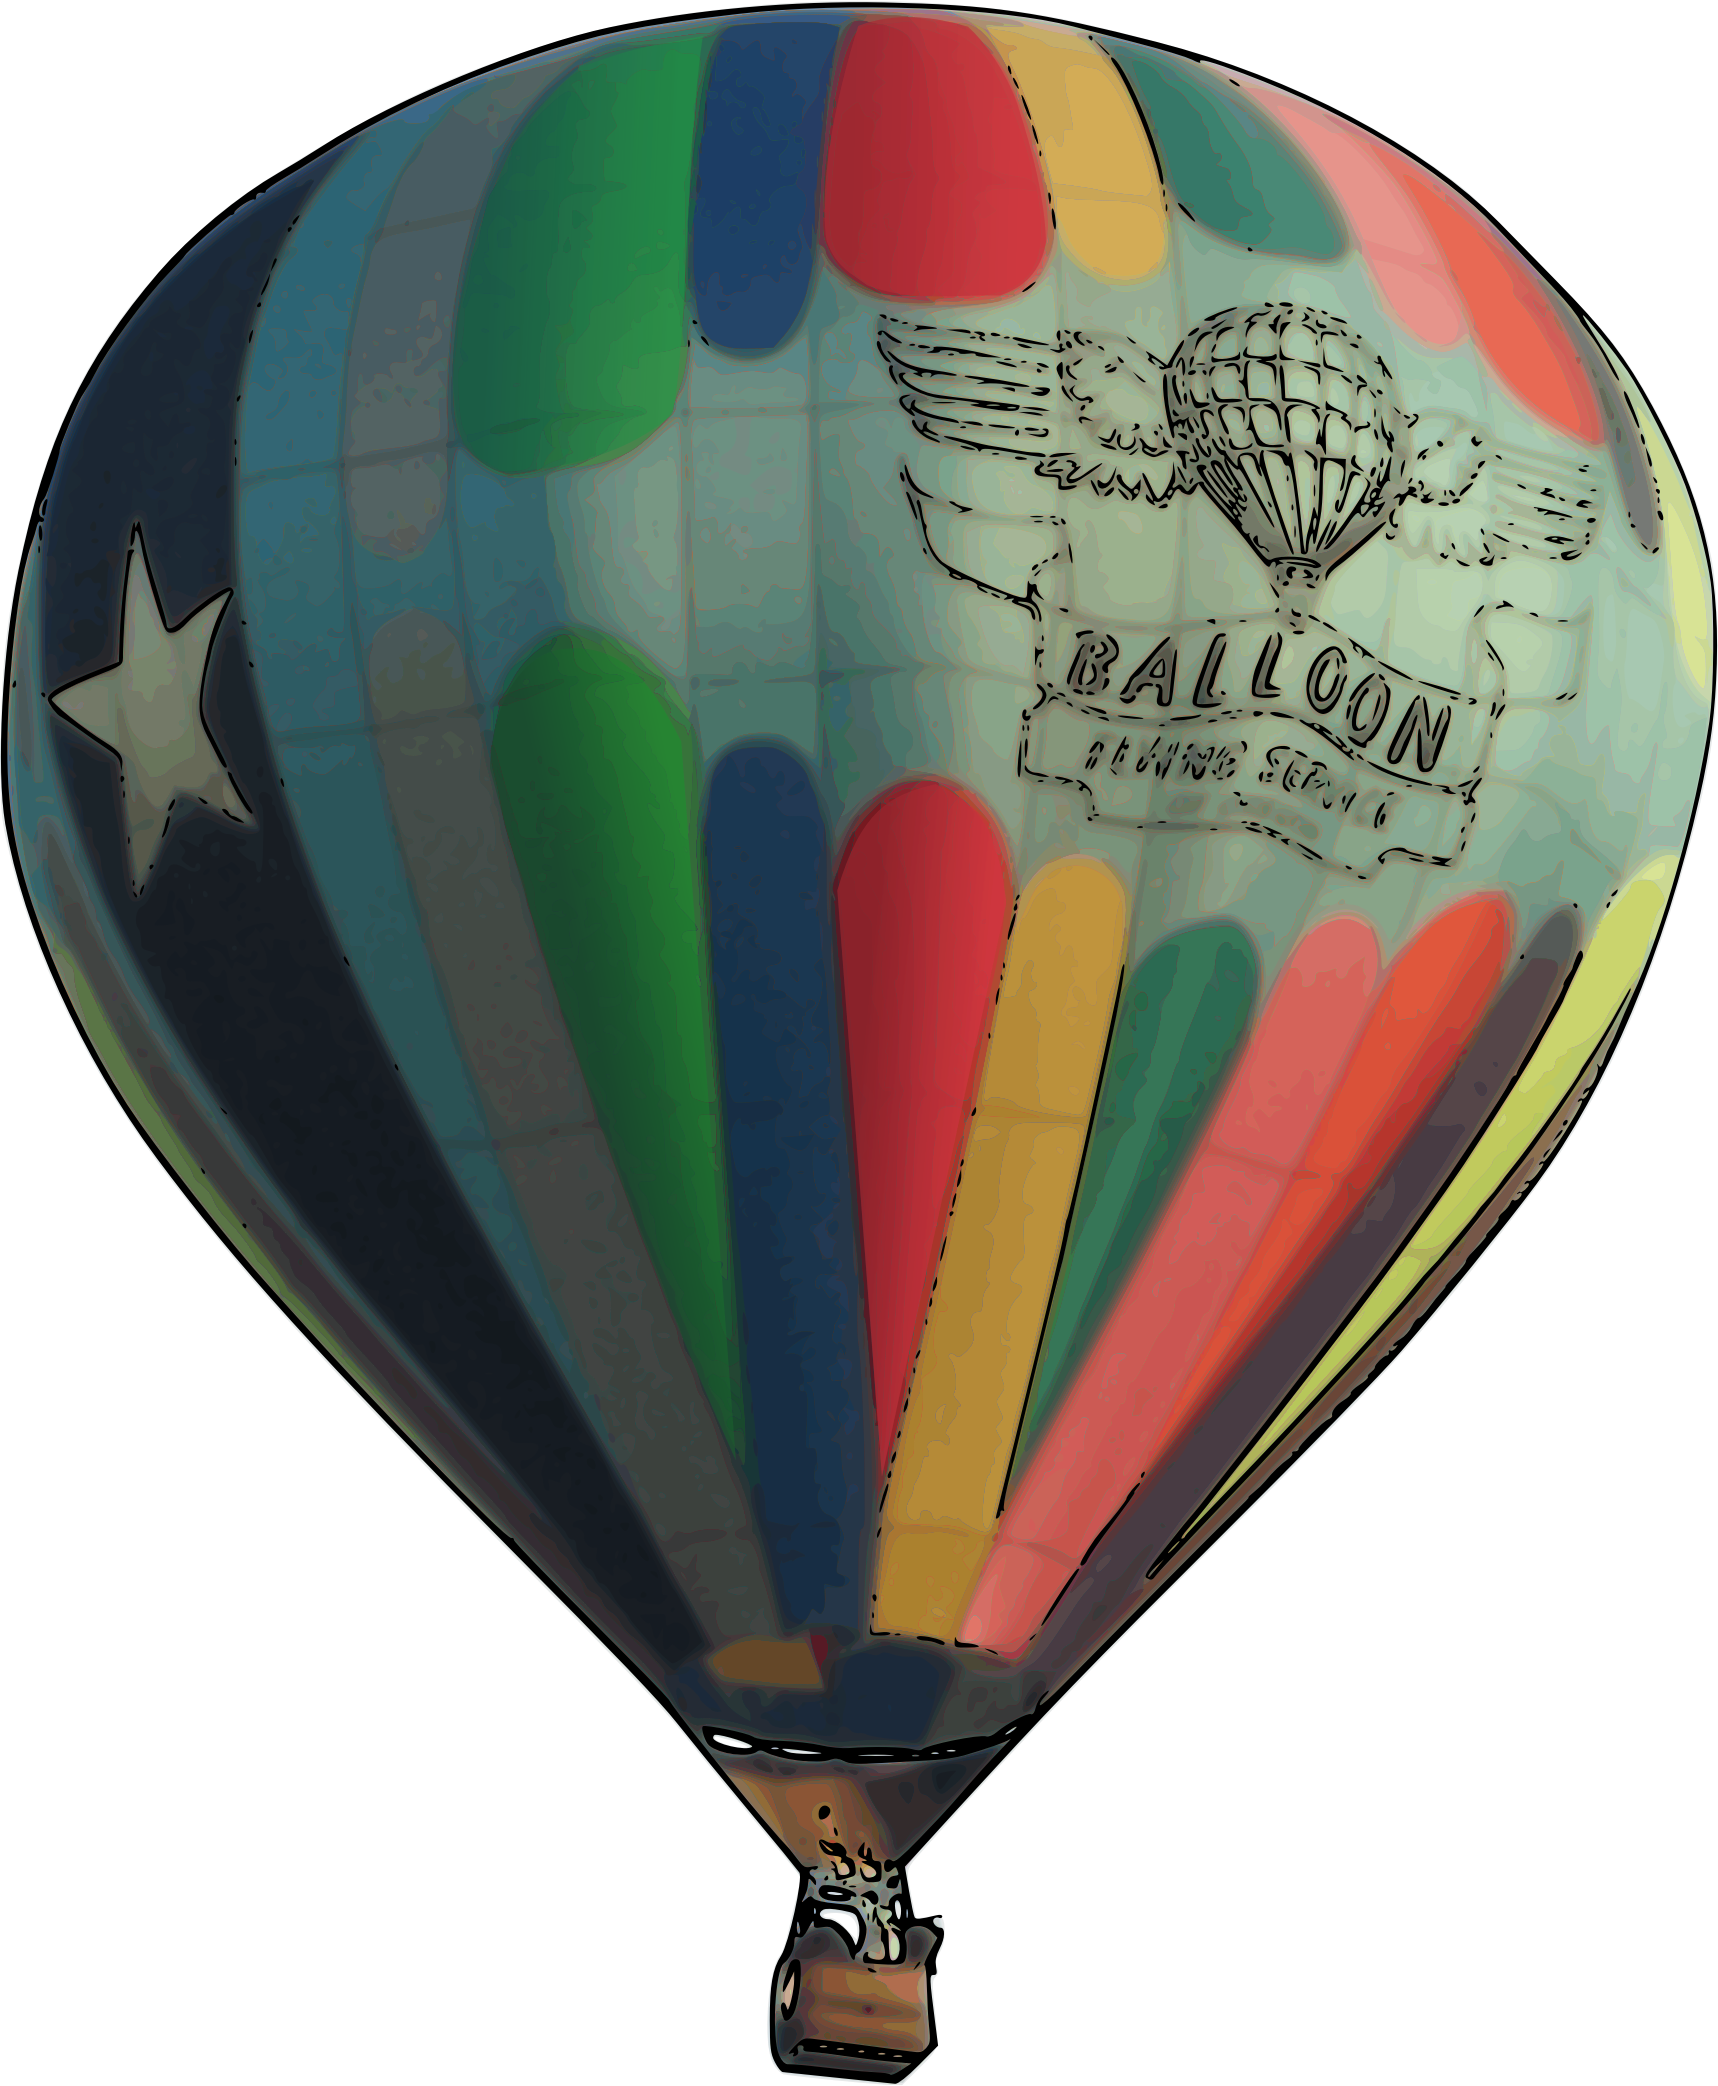 Air Balloon Free Download Image PNG Image